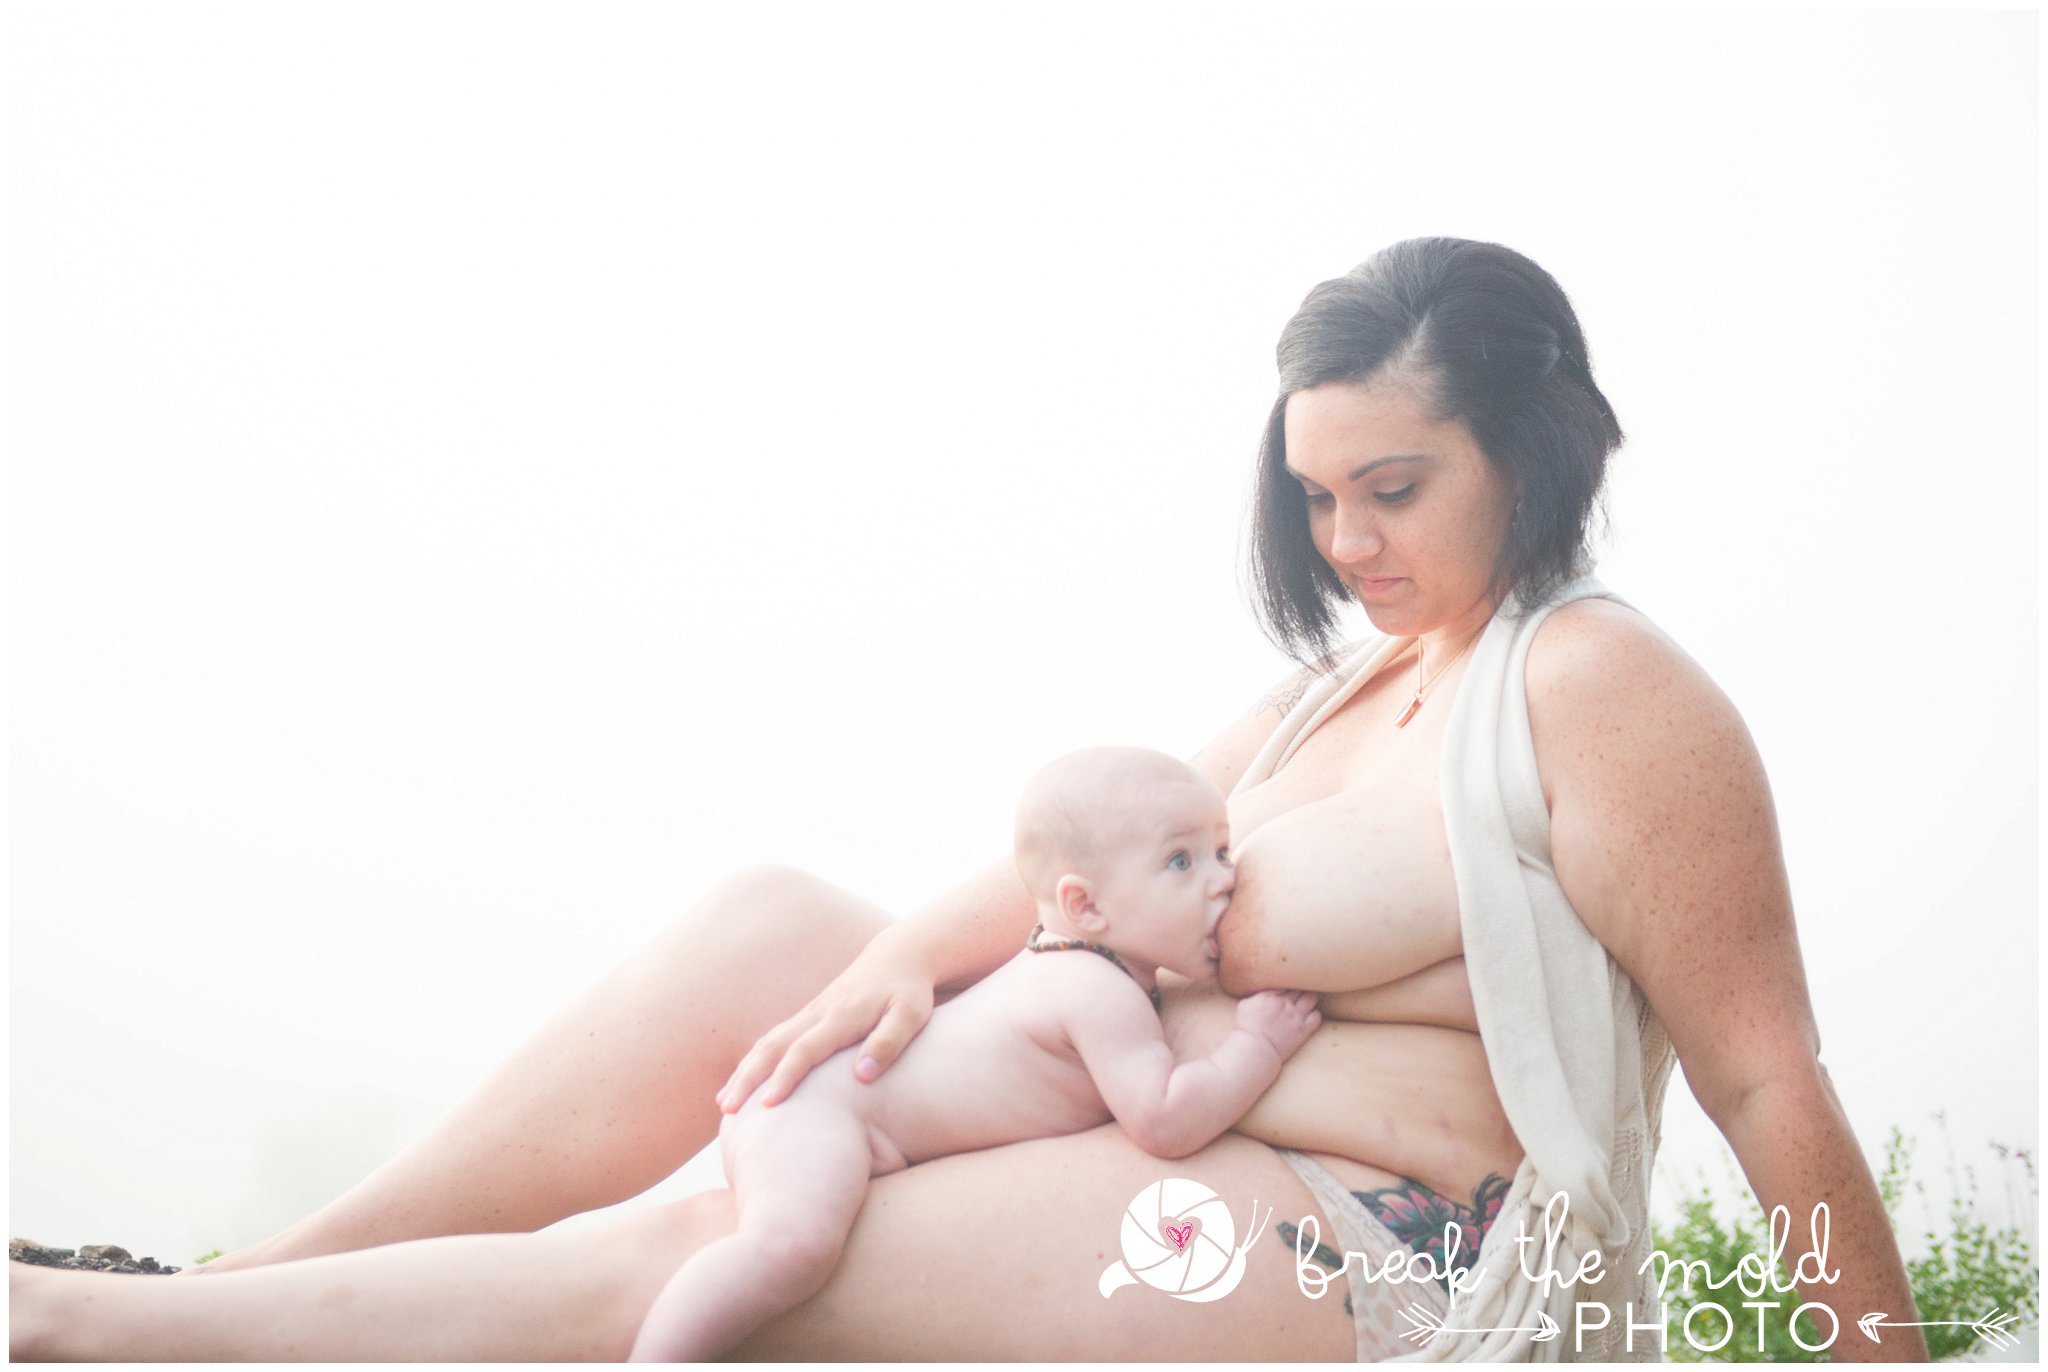 break-the-mold-photo-nursing-breastfeeding-session-womens-beauty-woman-body-nurse-breastfed (6).jpg